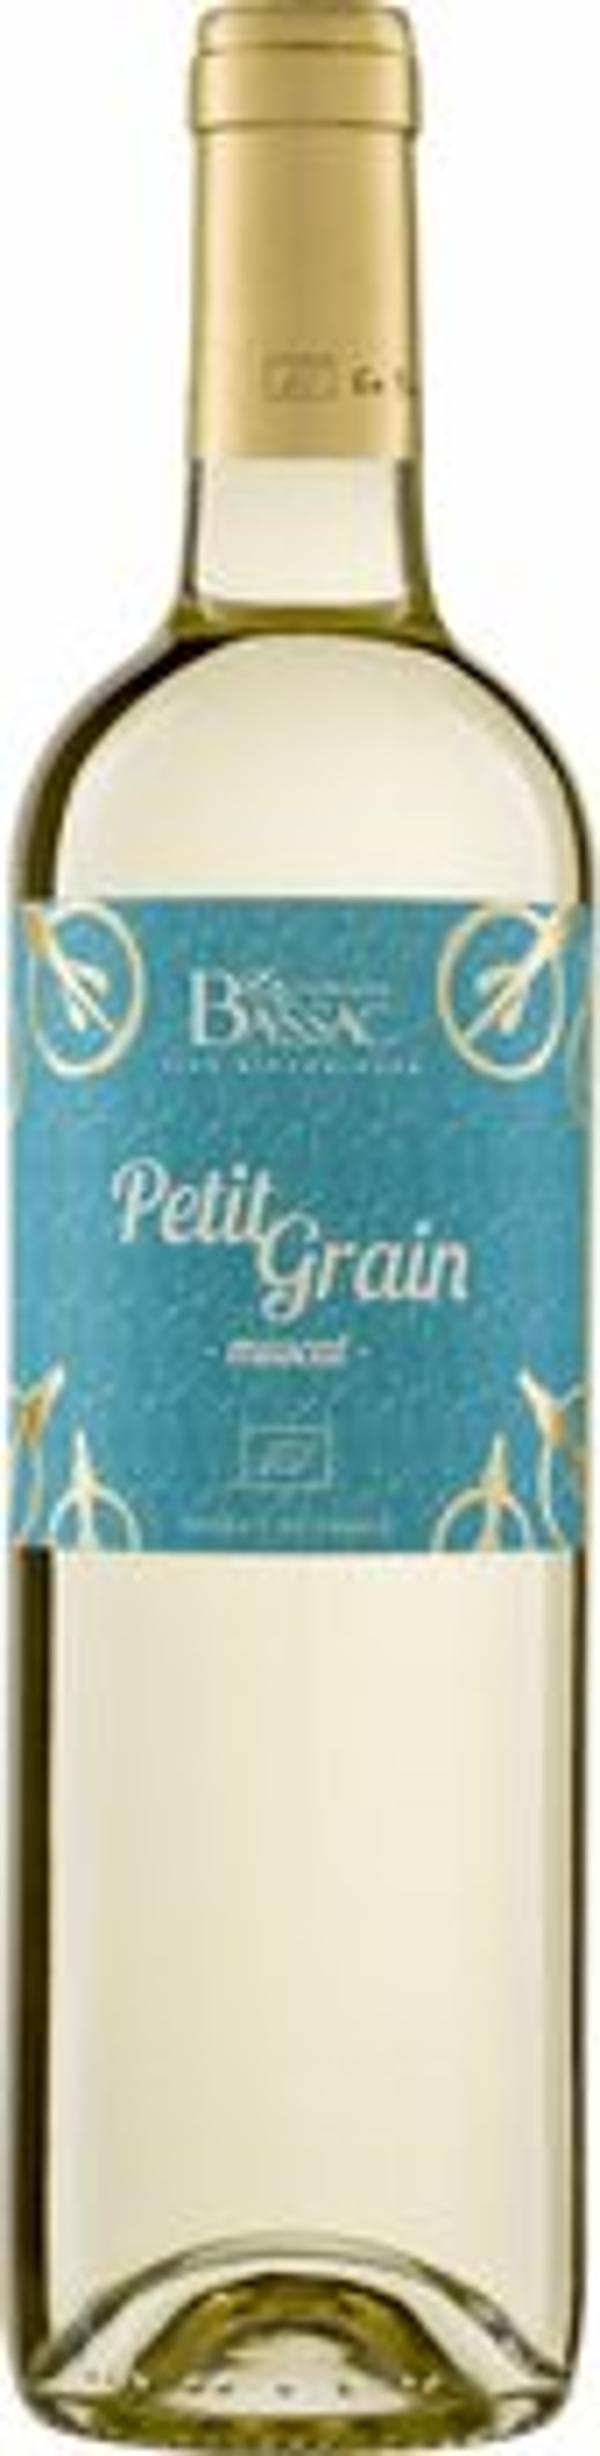 Produktfoto zu Muscat PETIT GRAIN Côtes de Th